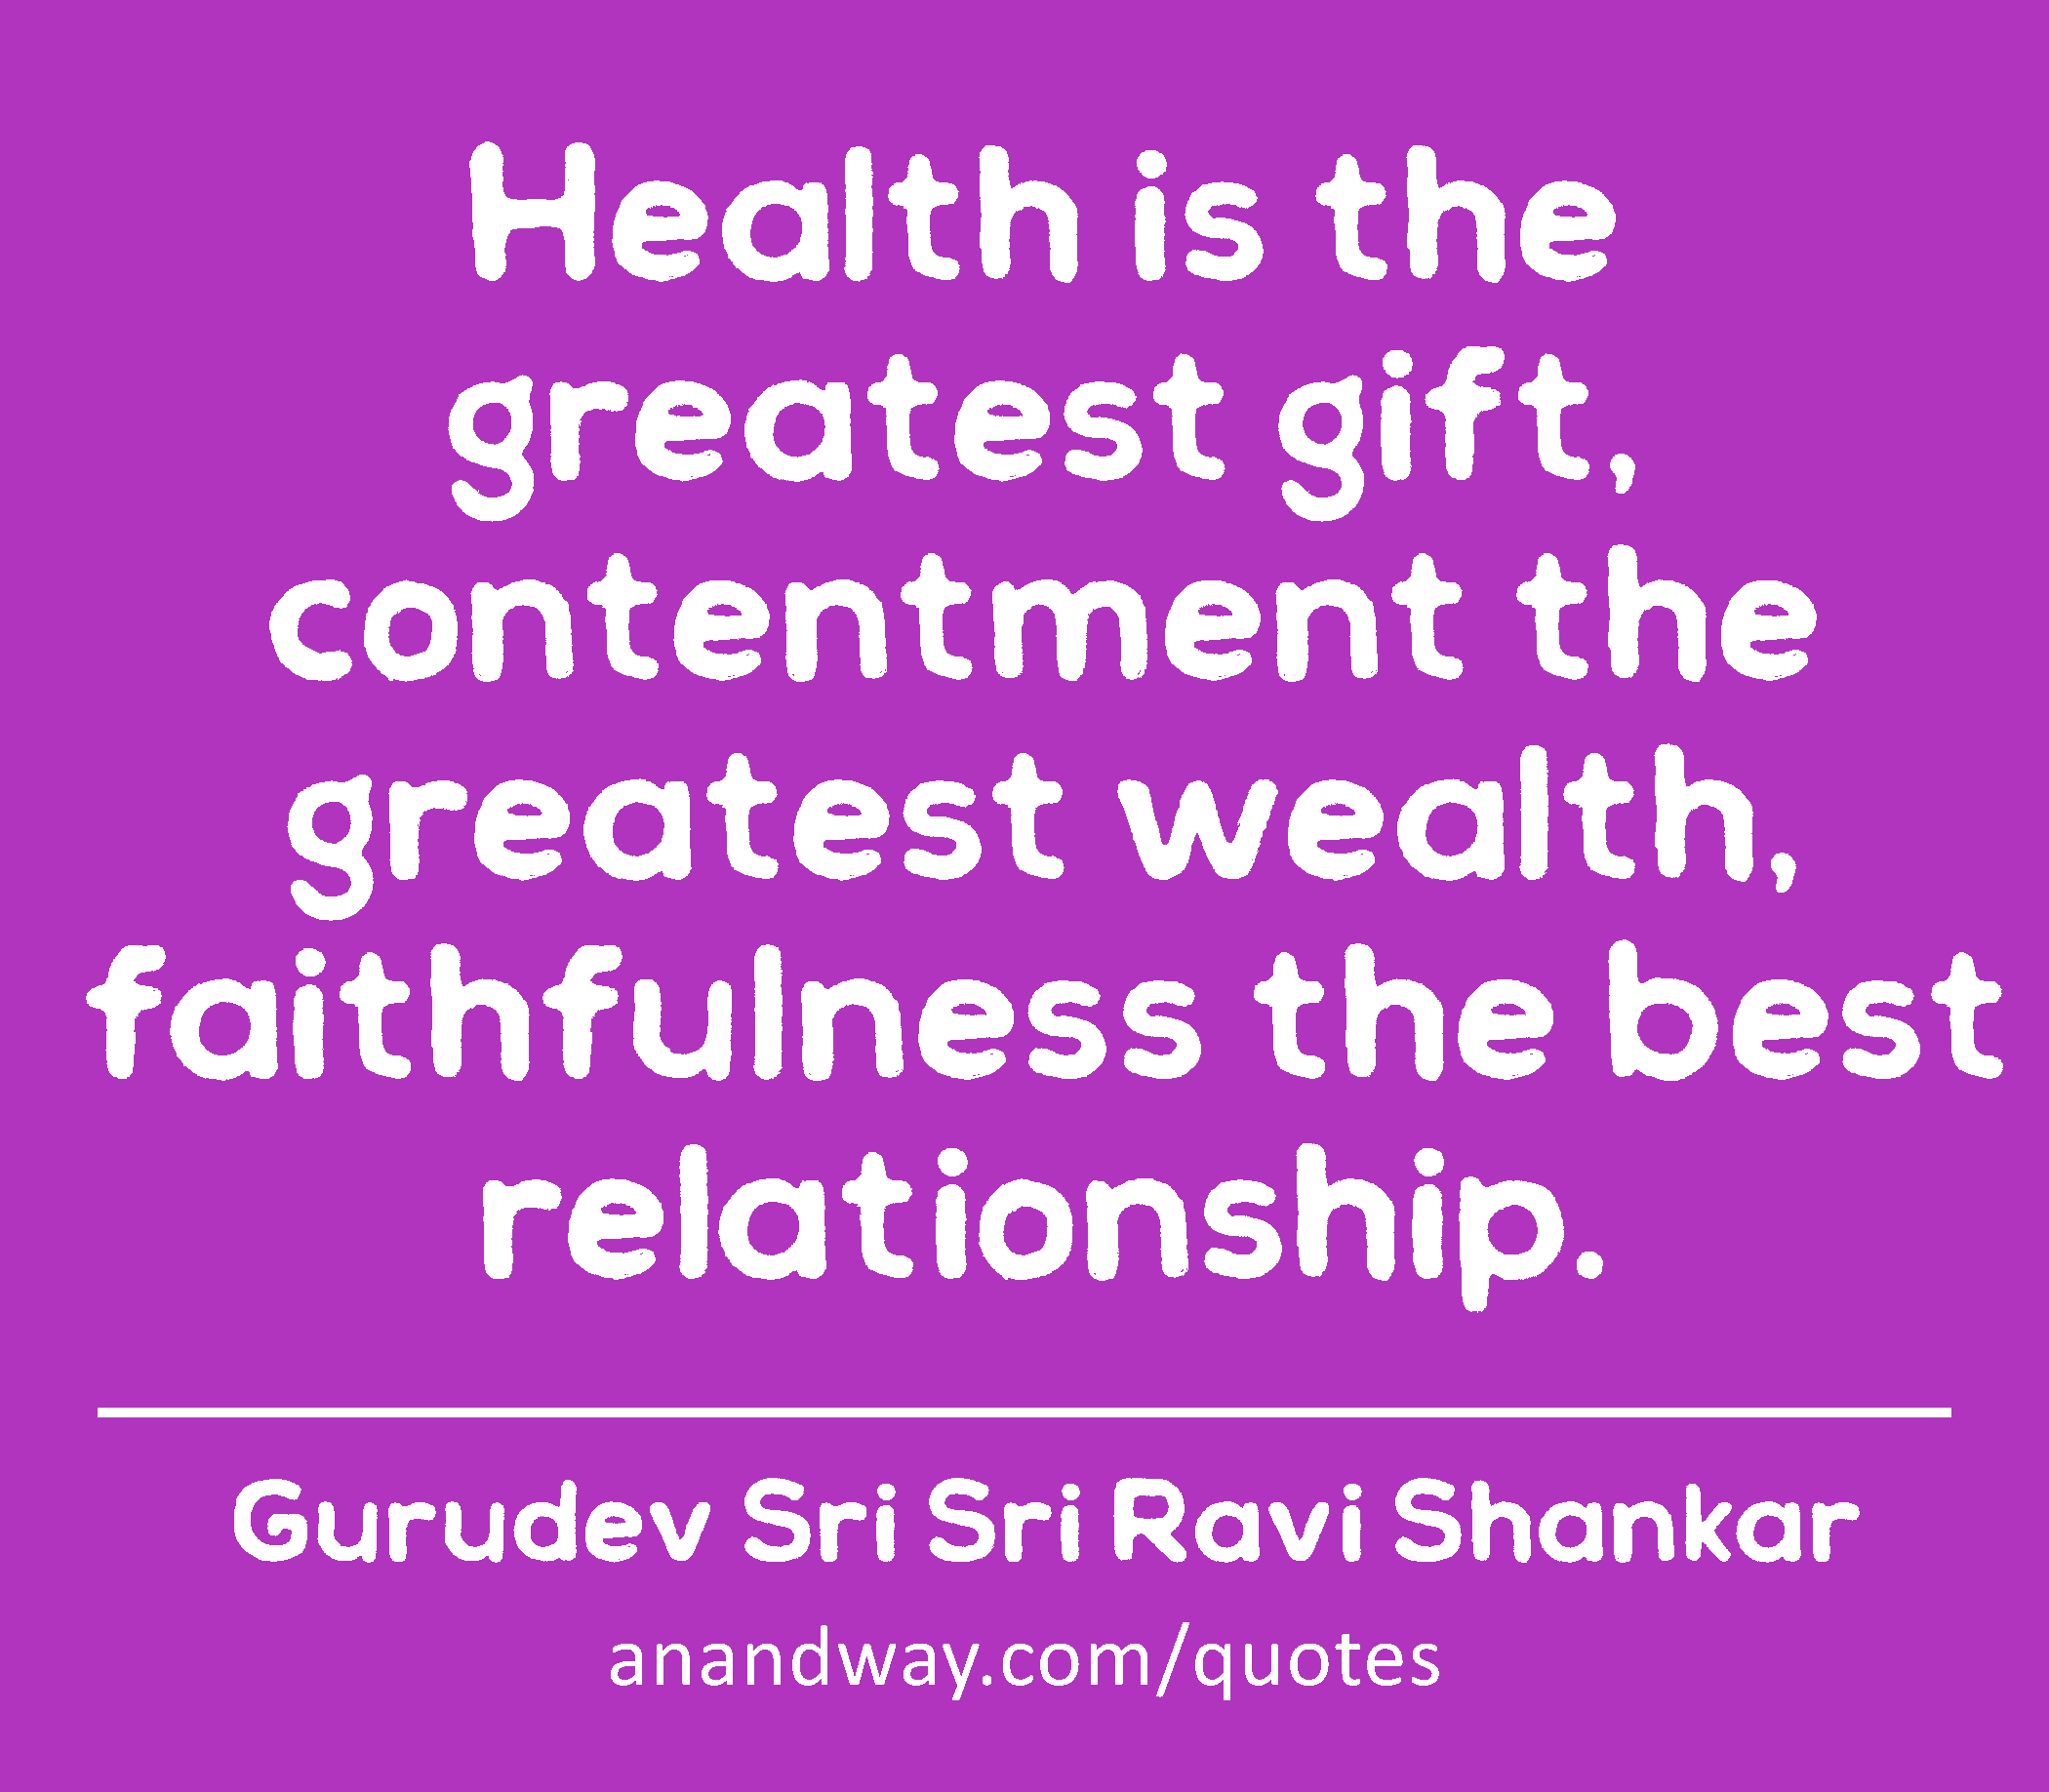 Health is the greatest gift, contentment the greatest wealth, faithfulness the best relationship. 
 -Gurudev Sri Sri Ravi Shankar